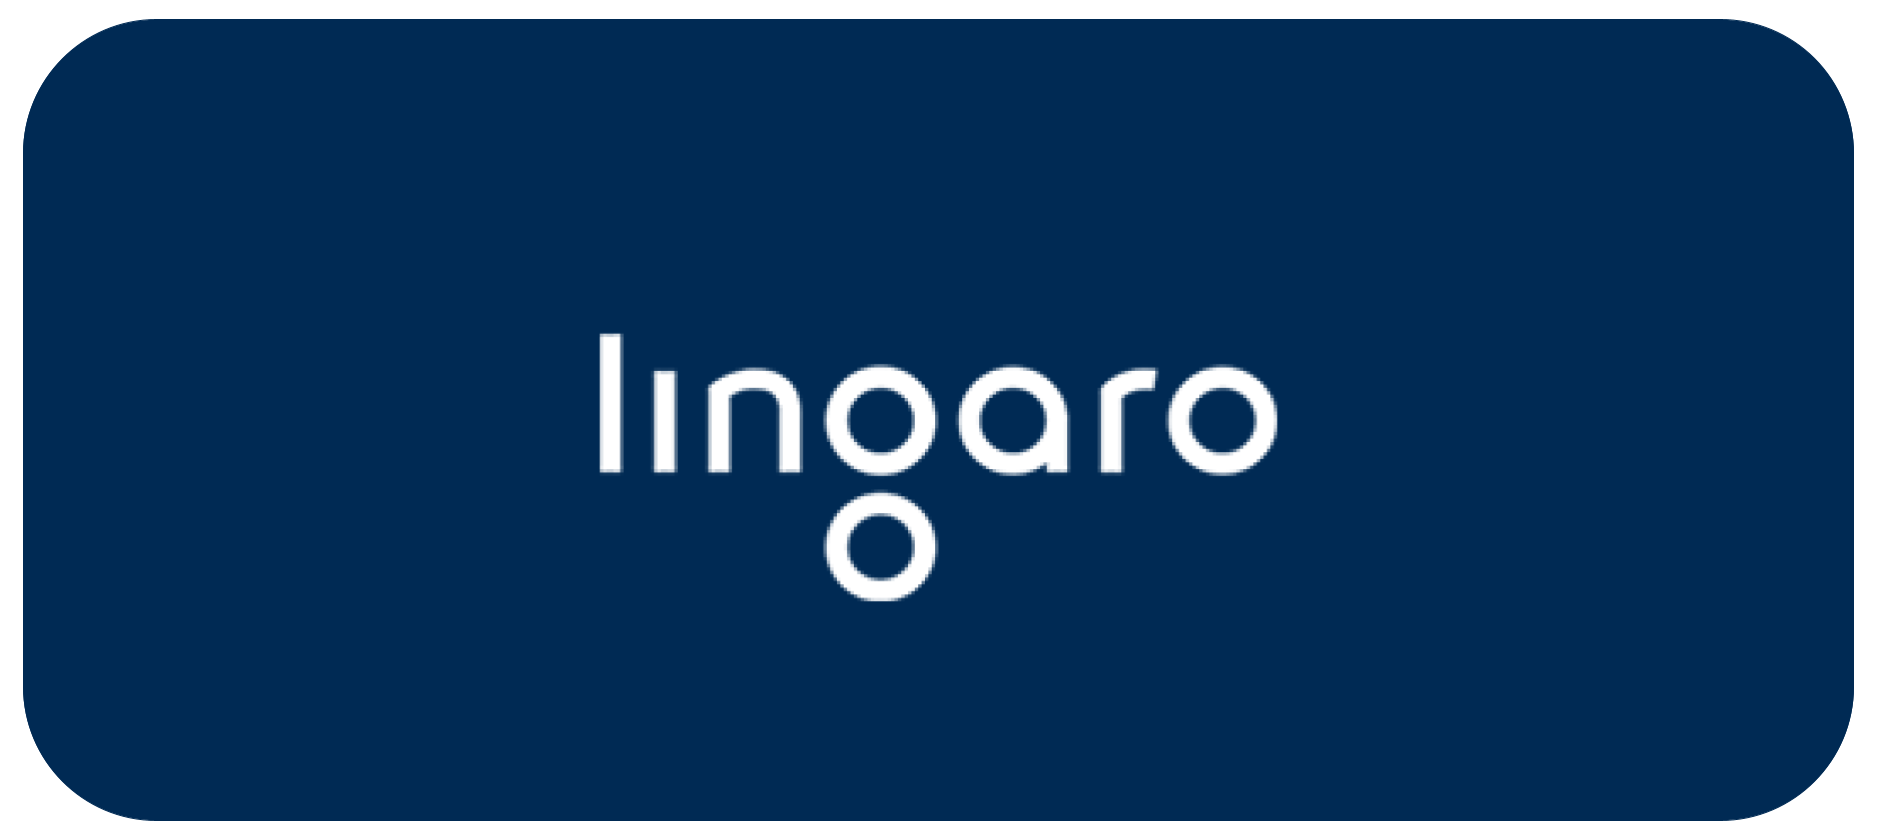 lingaro partner logo - visual for website